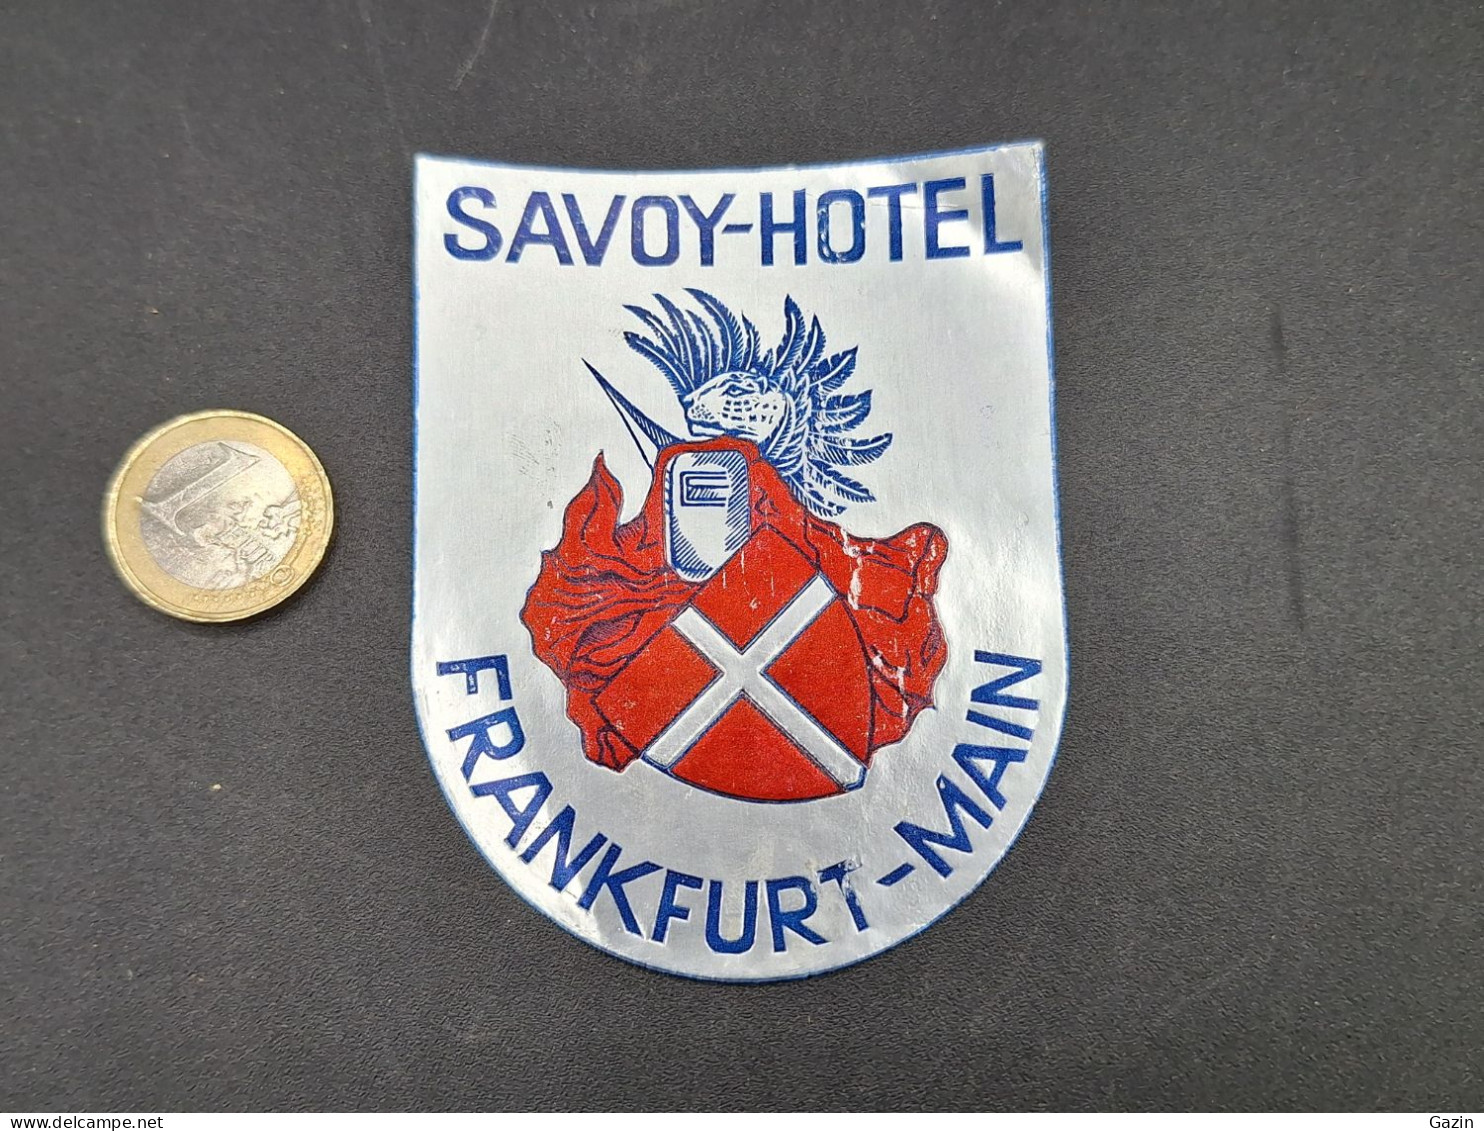 C7/3 - Hotel Savoy * Frankfurt - Main * Germany *  Luggage Lable * Rótulo * Etiqueta - Hotel Labels